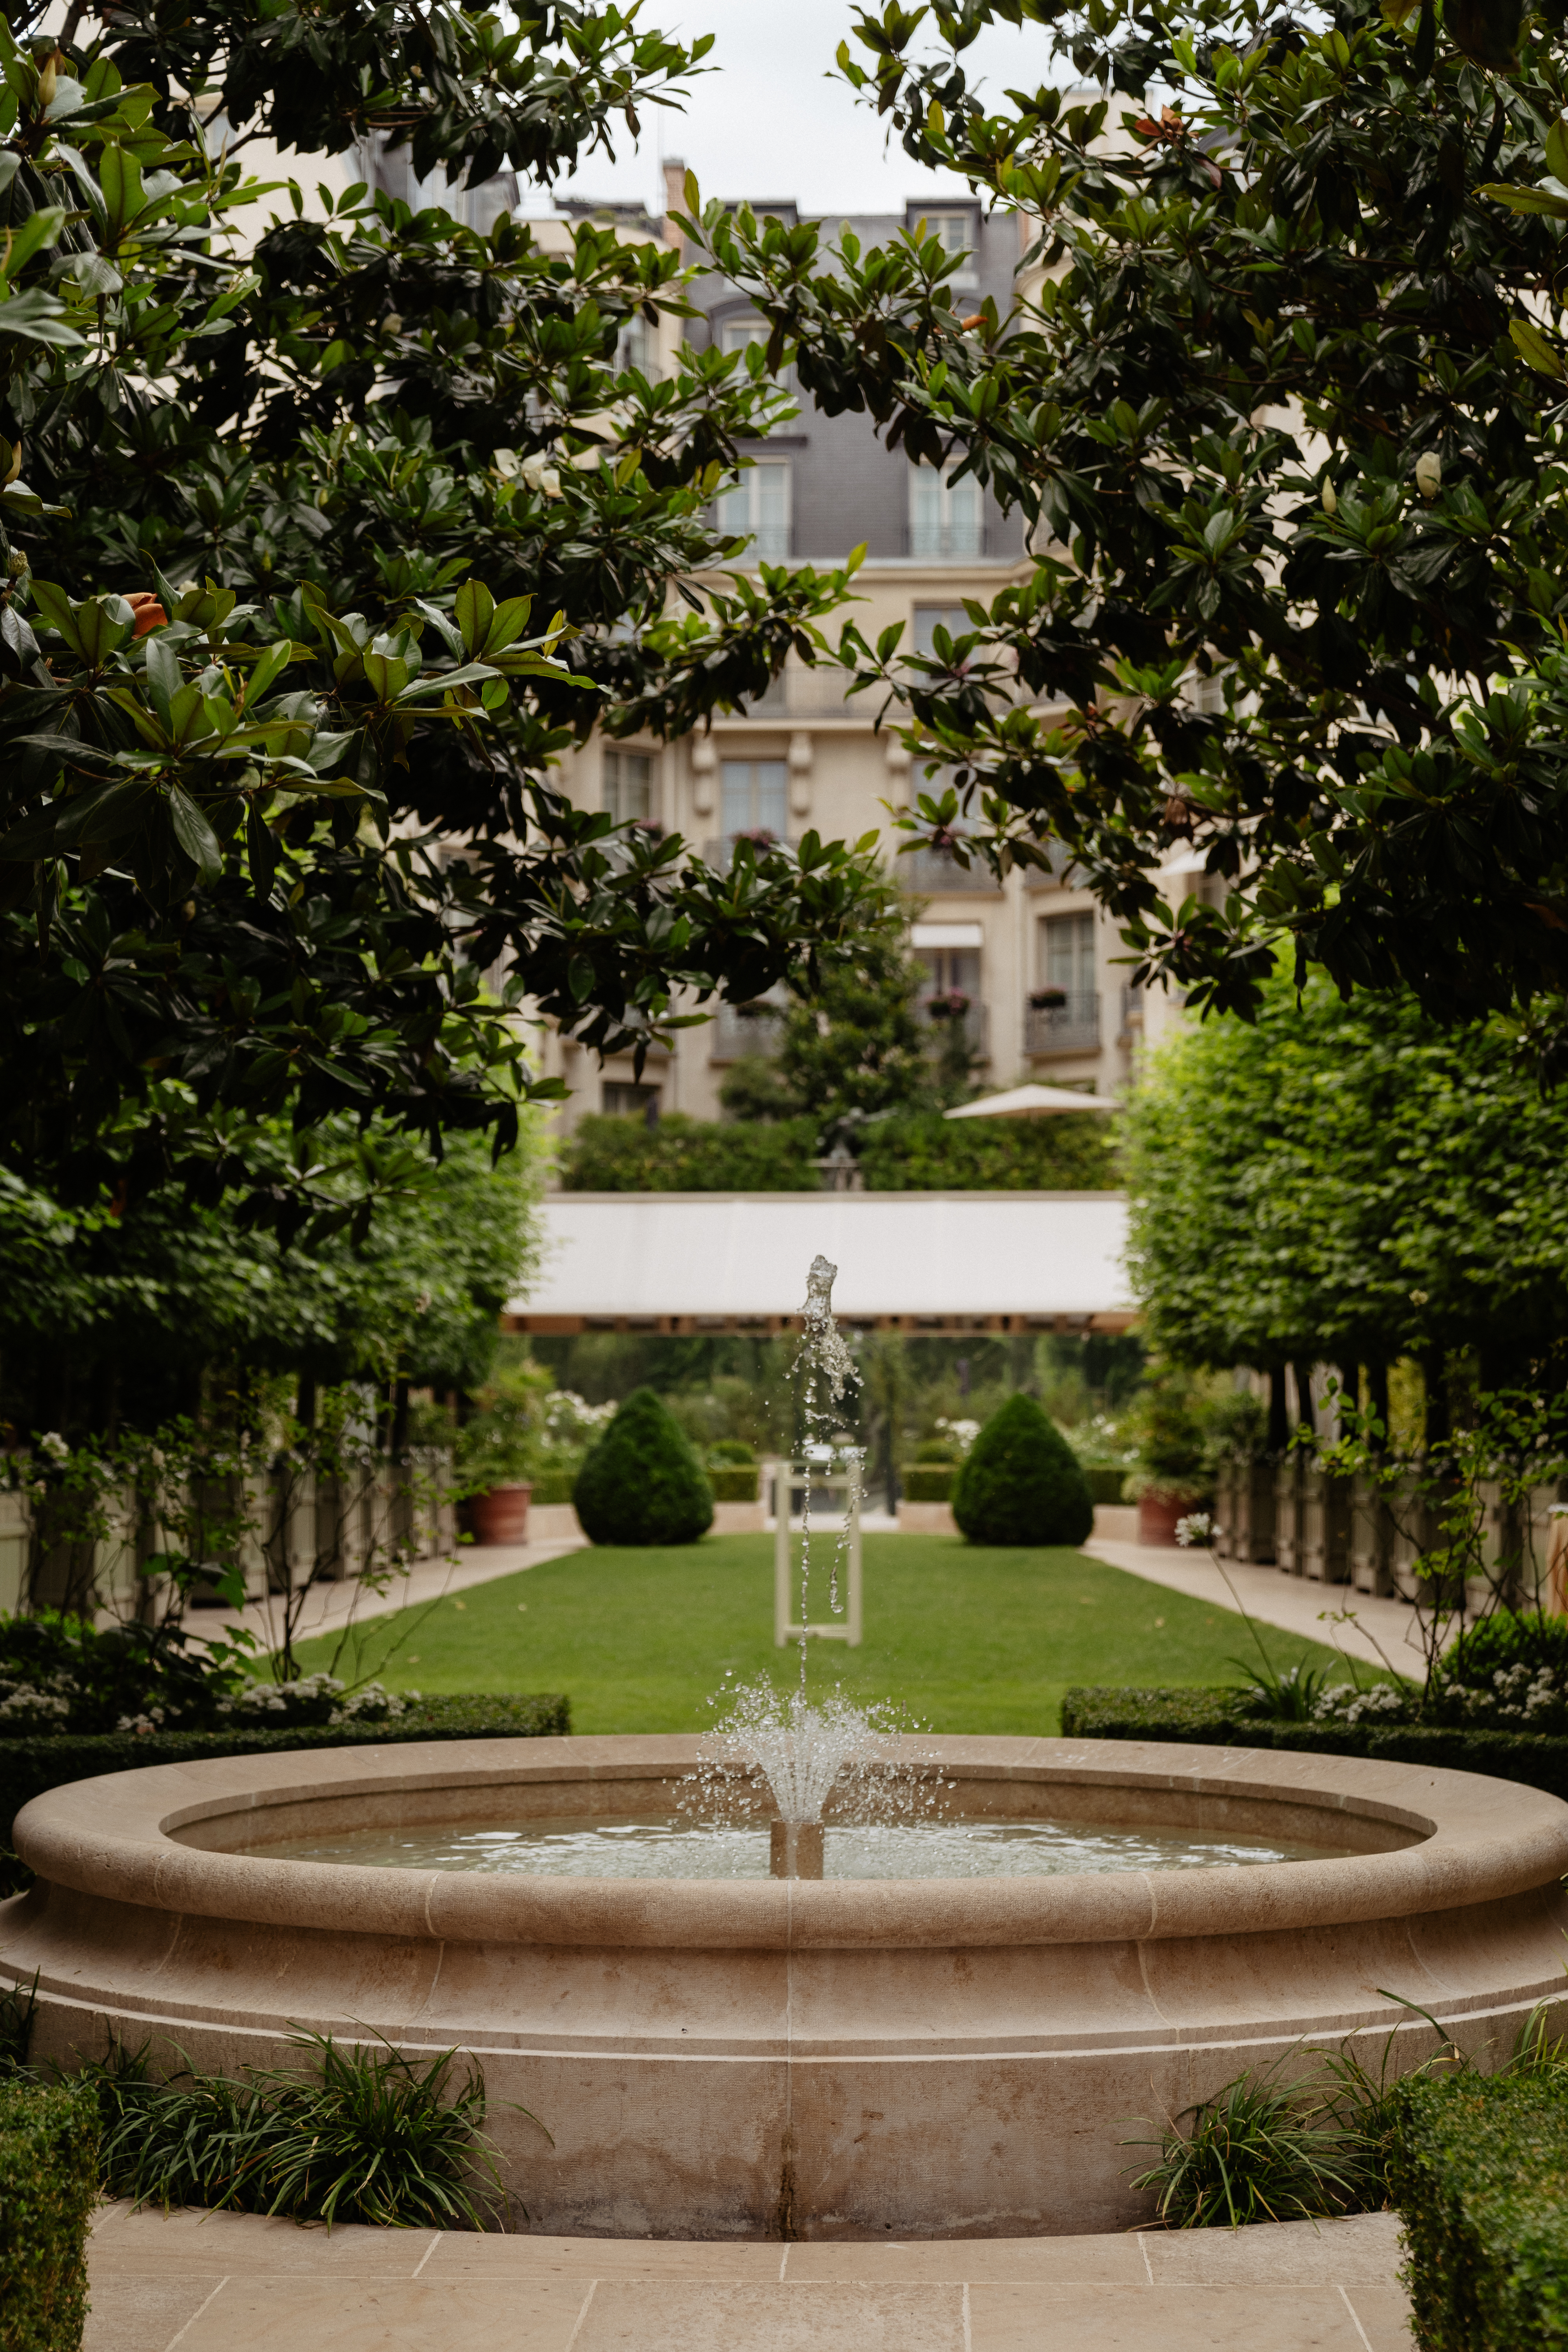 Destination wedding elopement at the luxurious Ritz Paris garden with fountain 